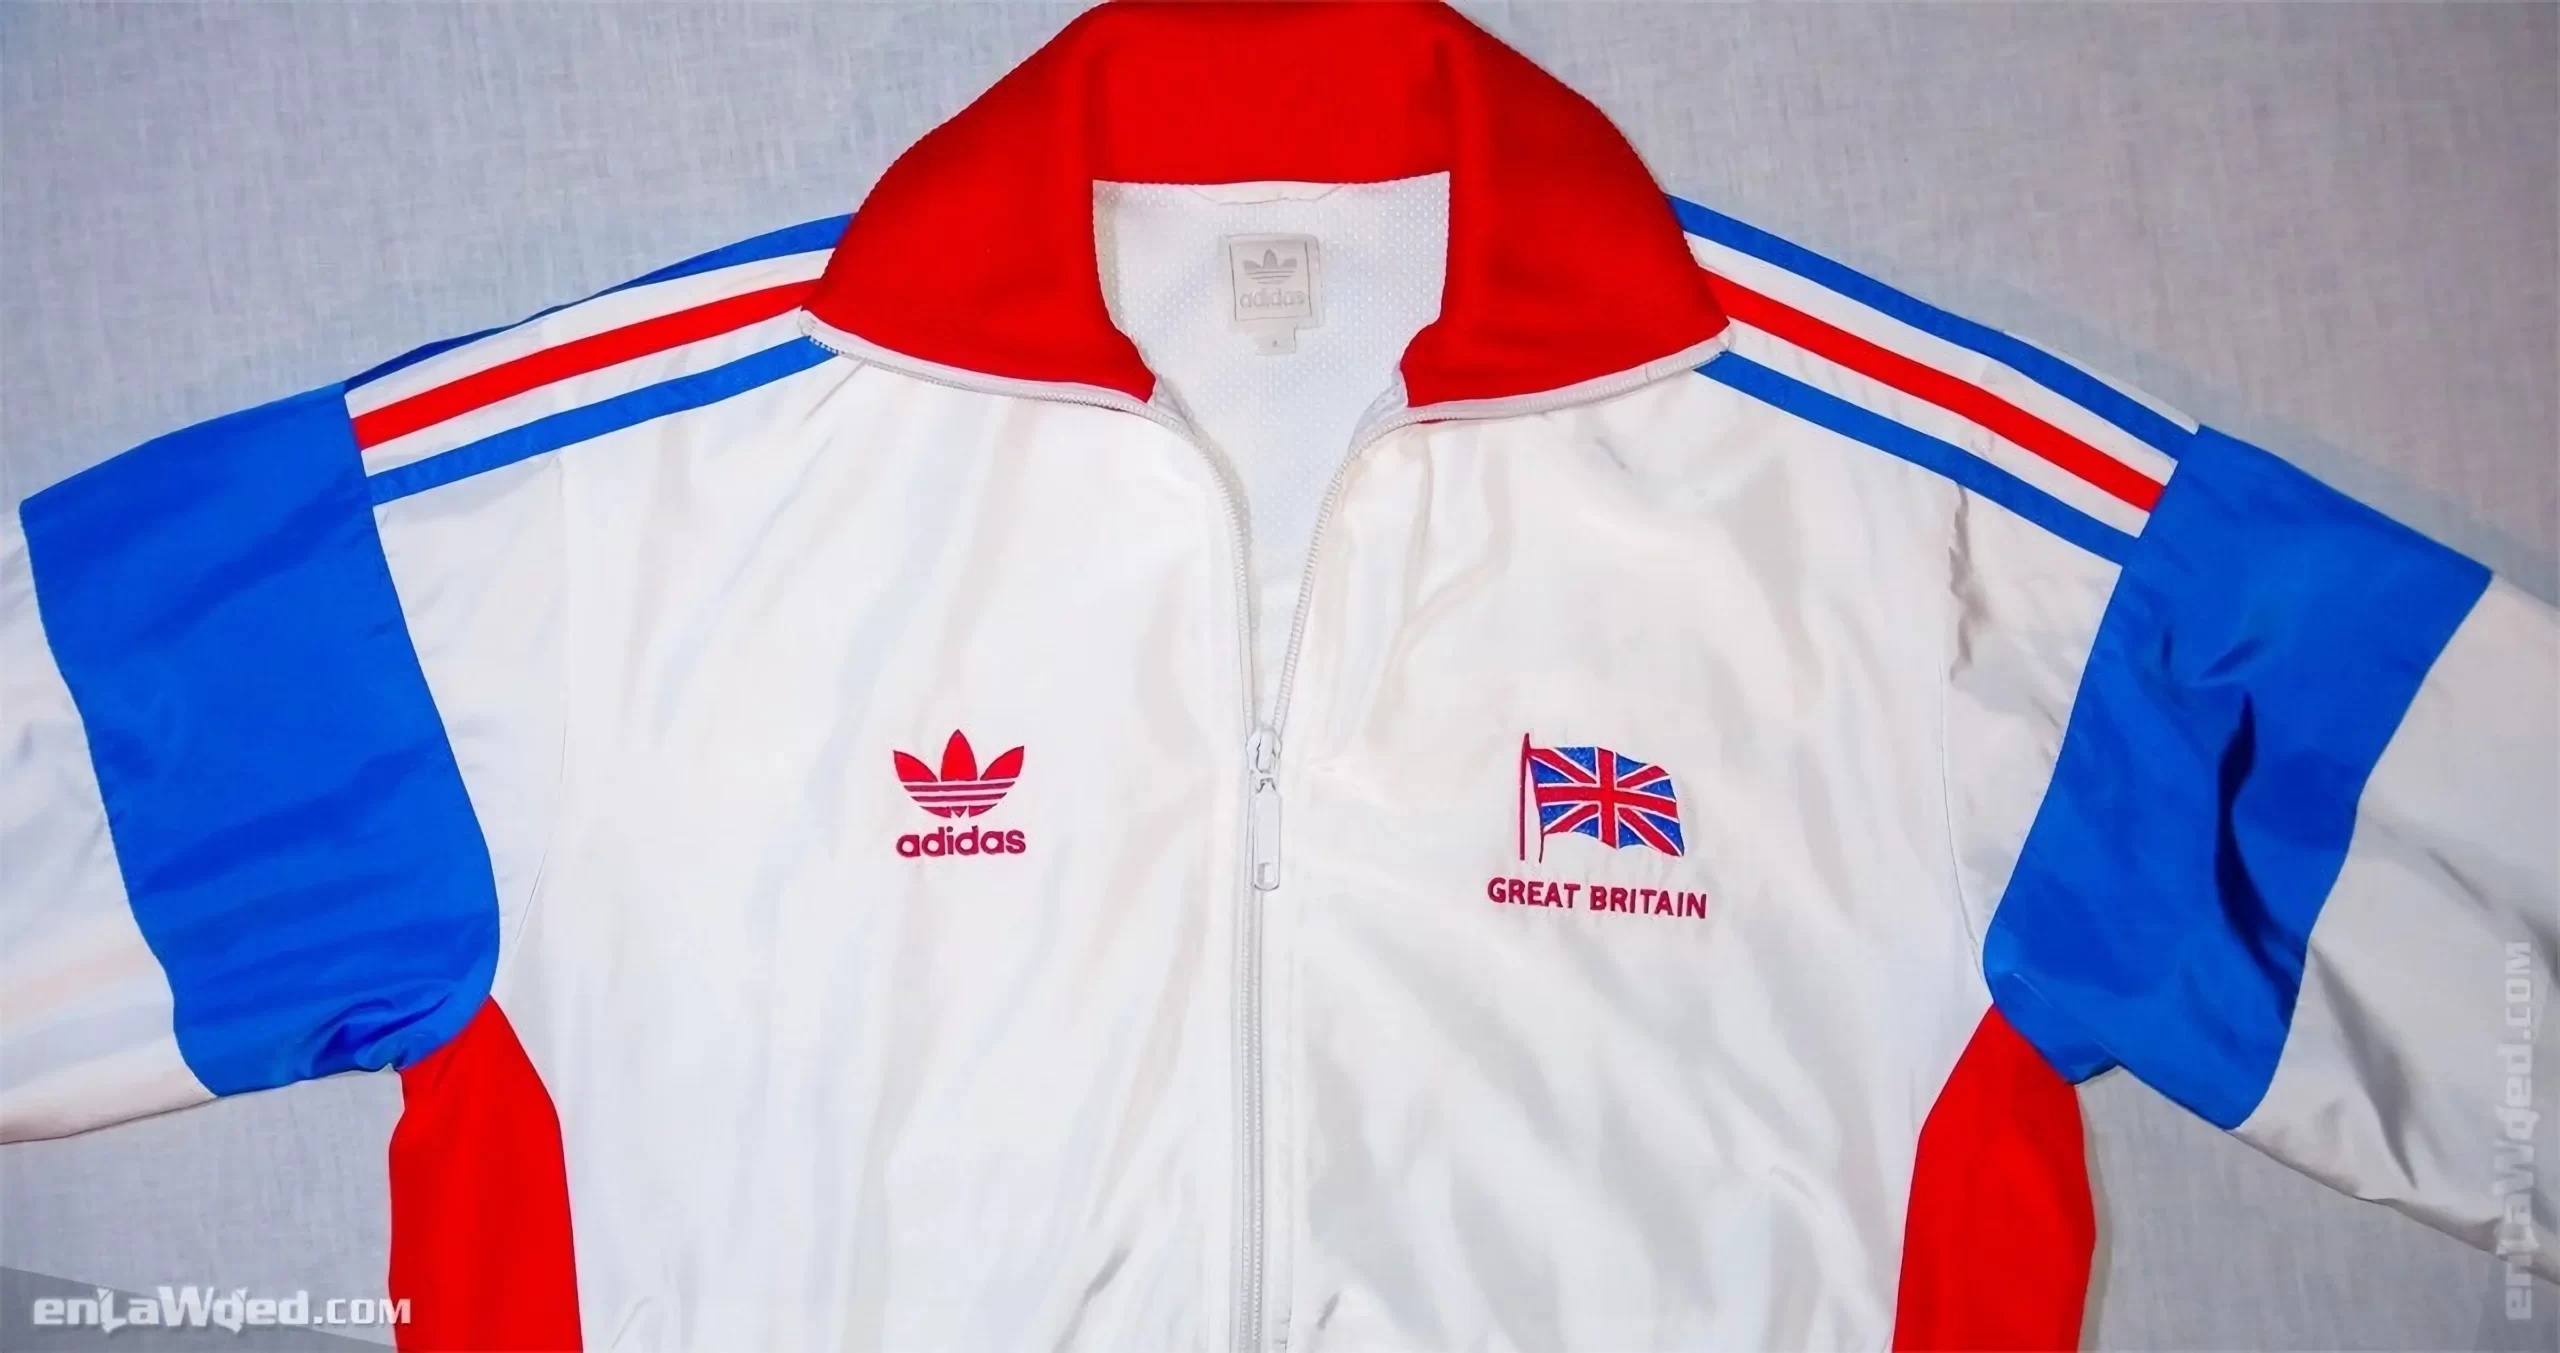 Men’s 2005 Great Britain Olympic ’84 TT by Adidas: Supported (EnLawded.com file #lmcemegu6wxjuw60gsl)